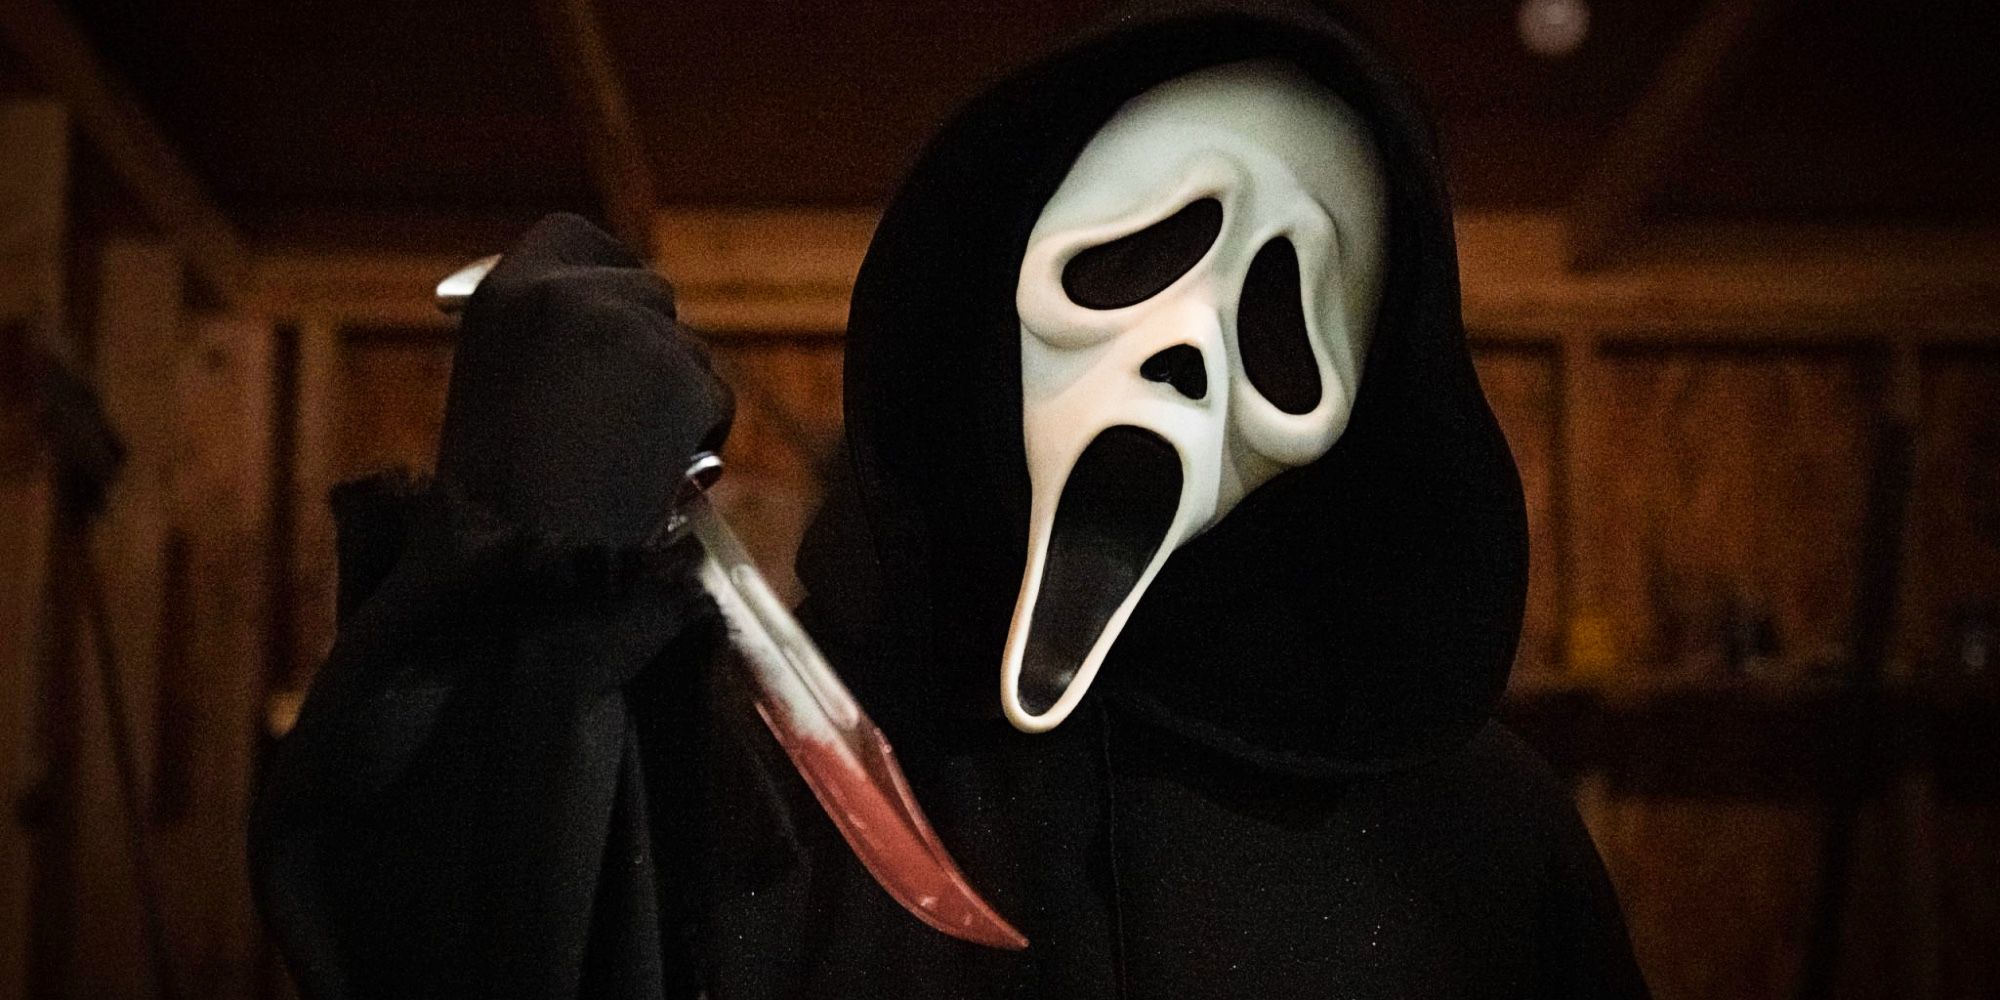 Scream 2022 Ghostface killer image header